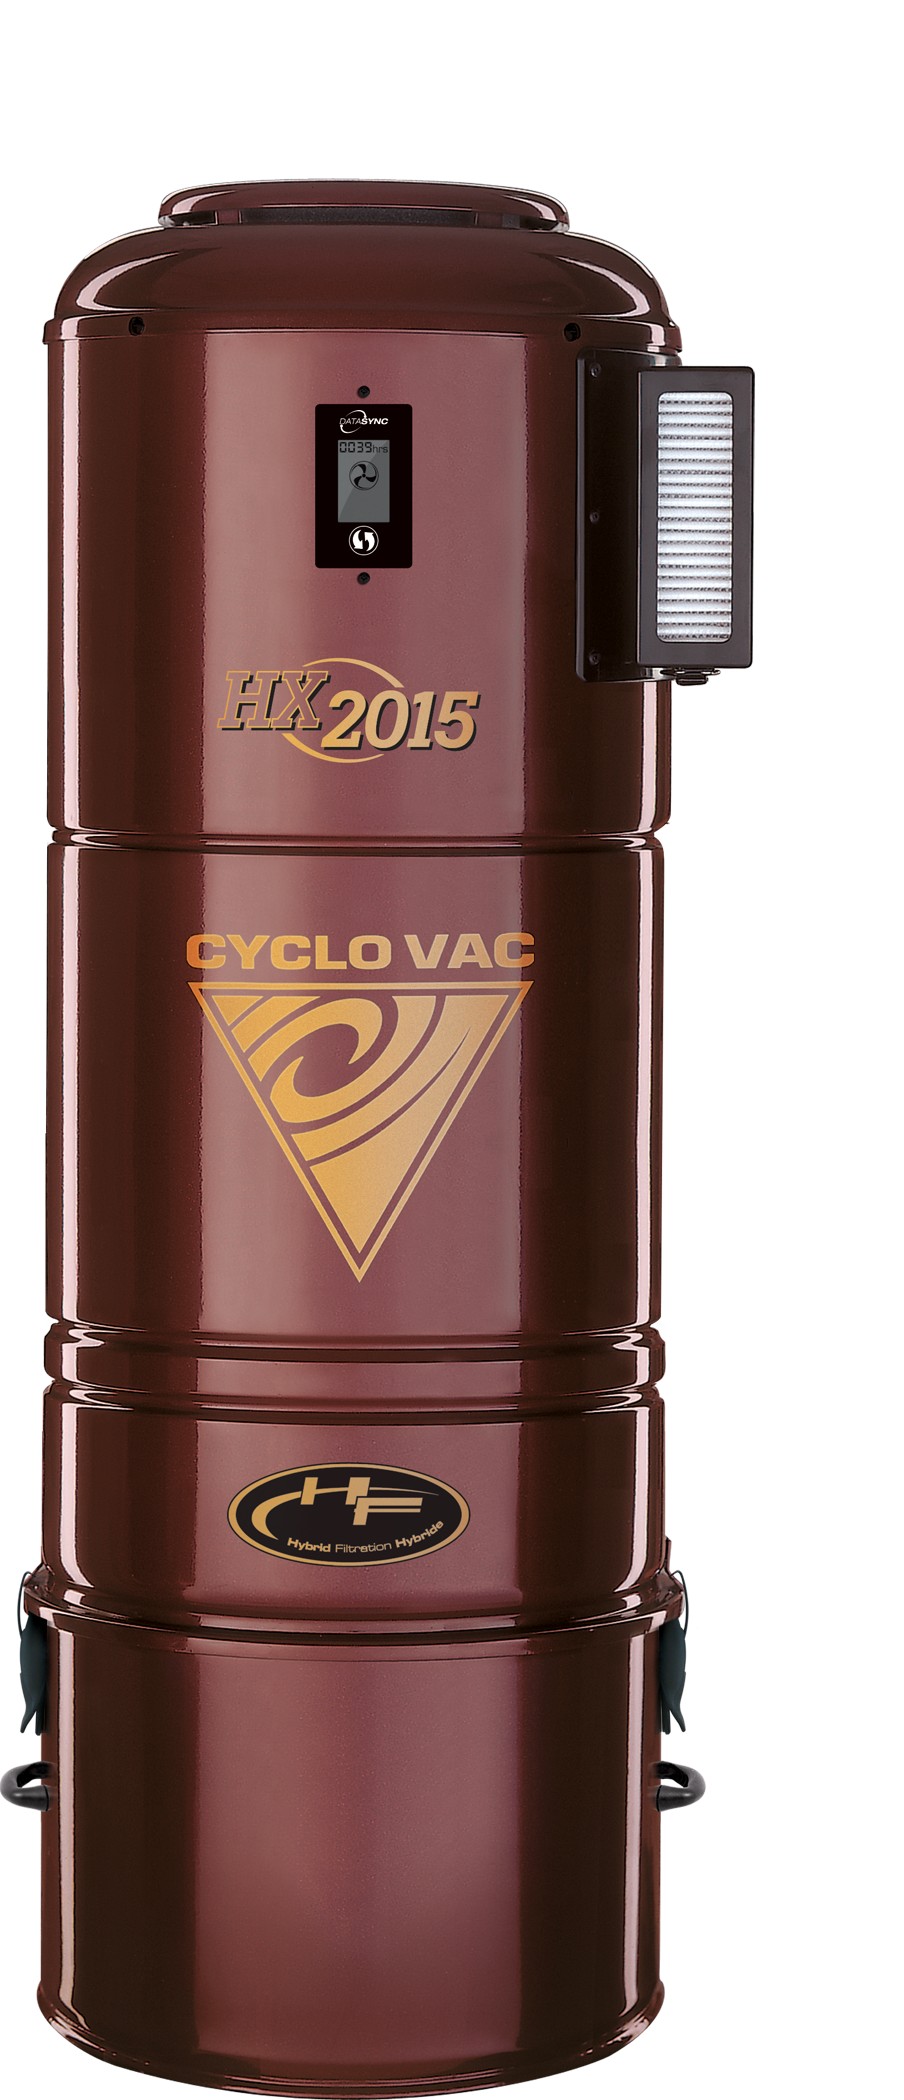 Jednostka centralna Cyclo Vac HX2015